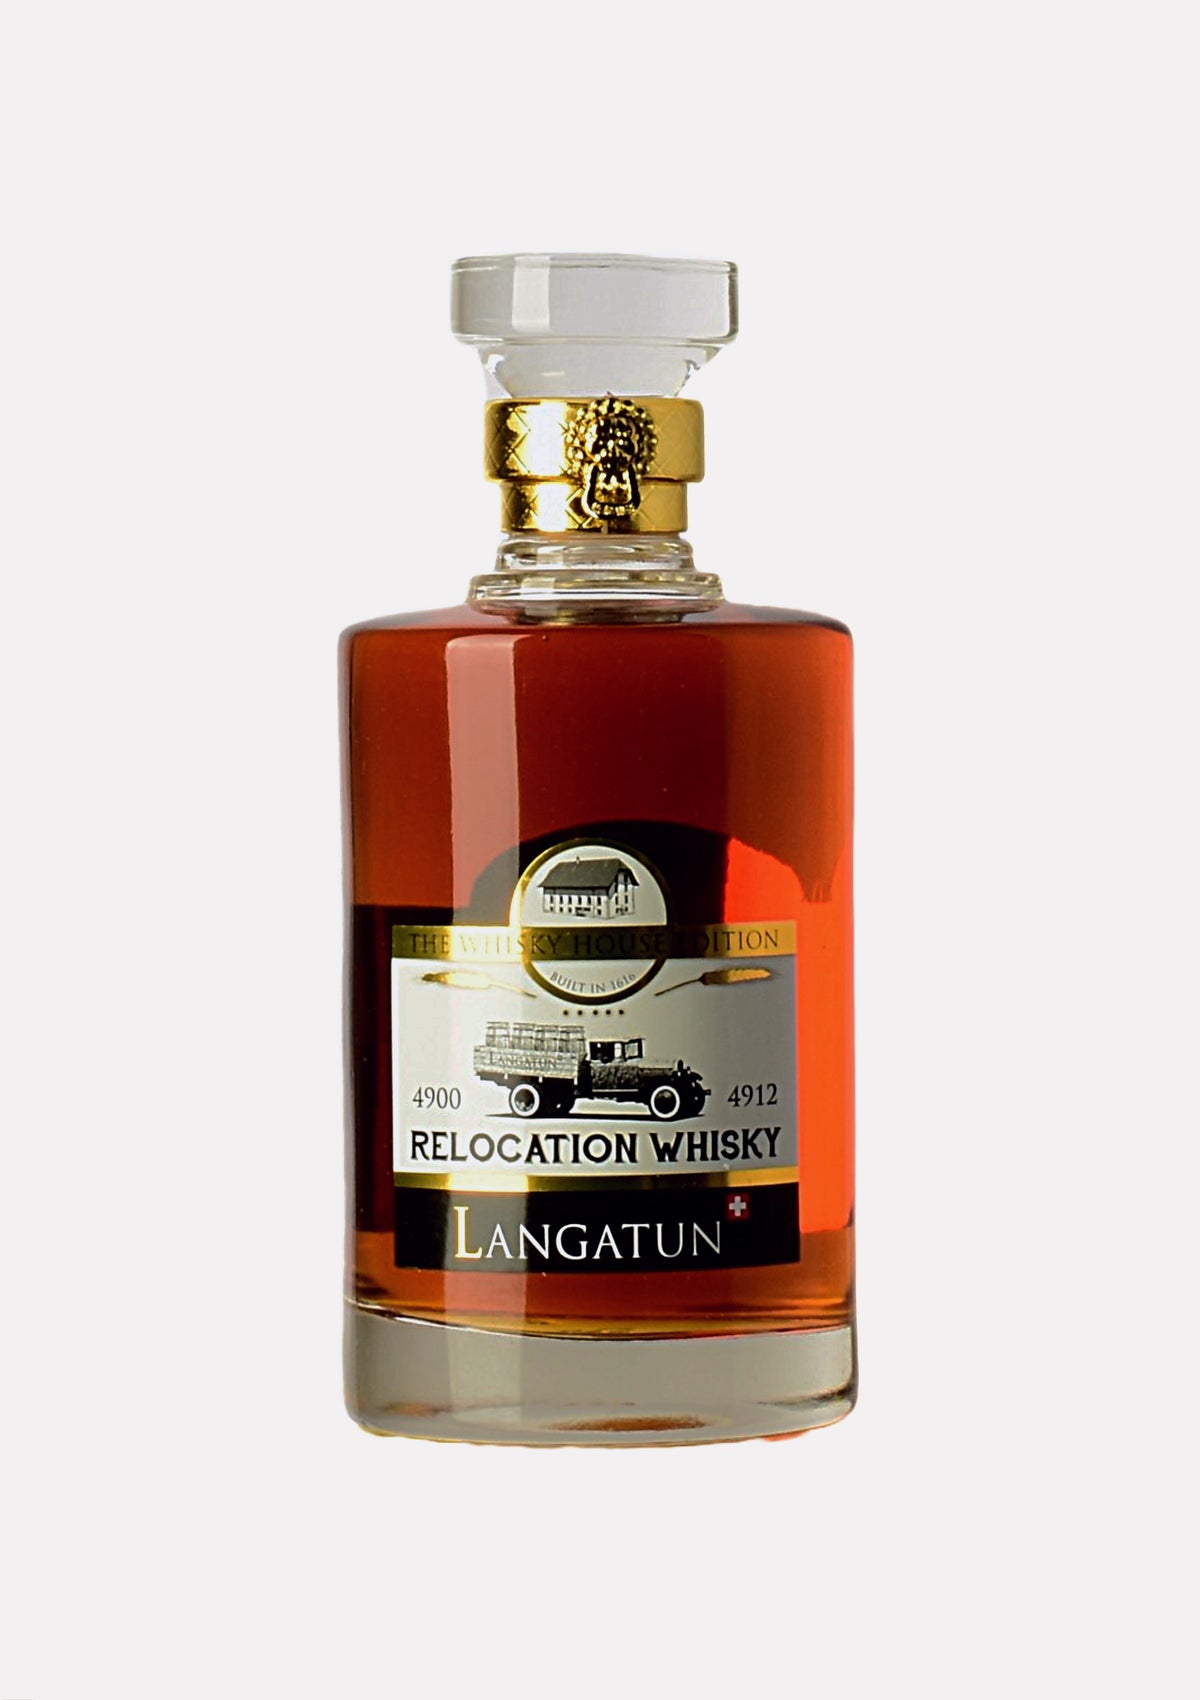 Langatun 2008- 2014 Relocation Whisky